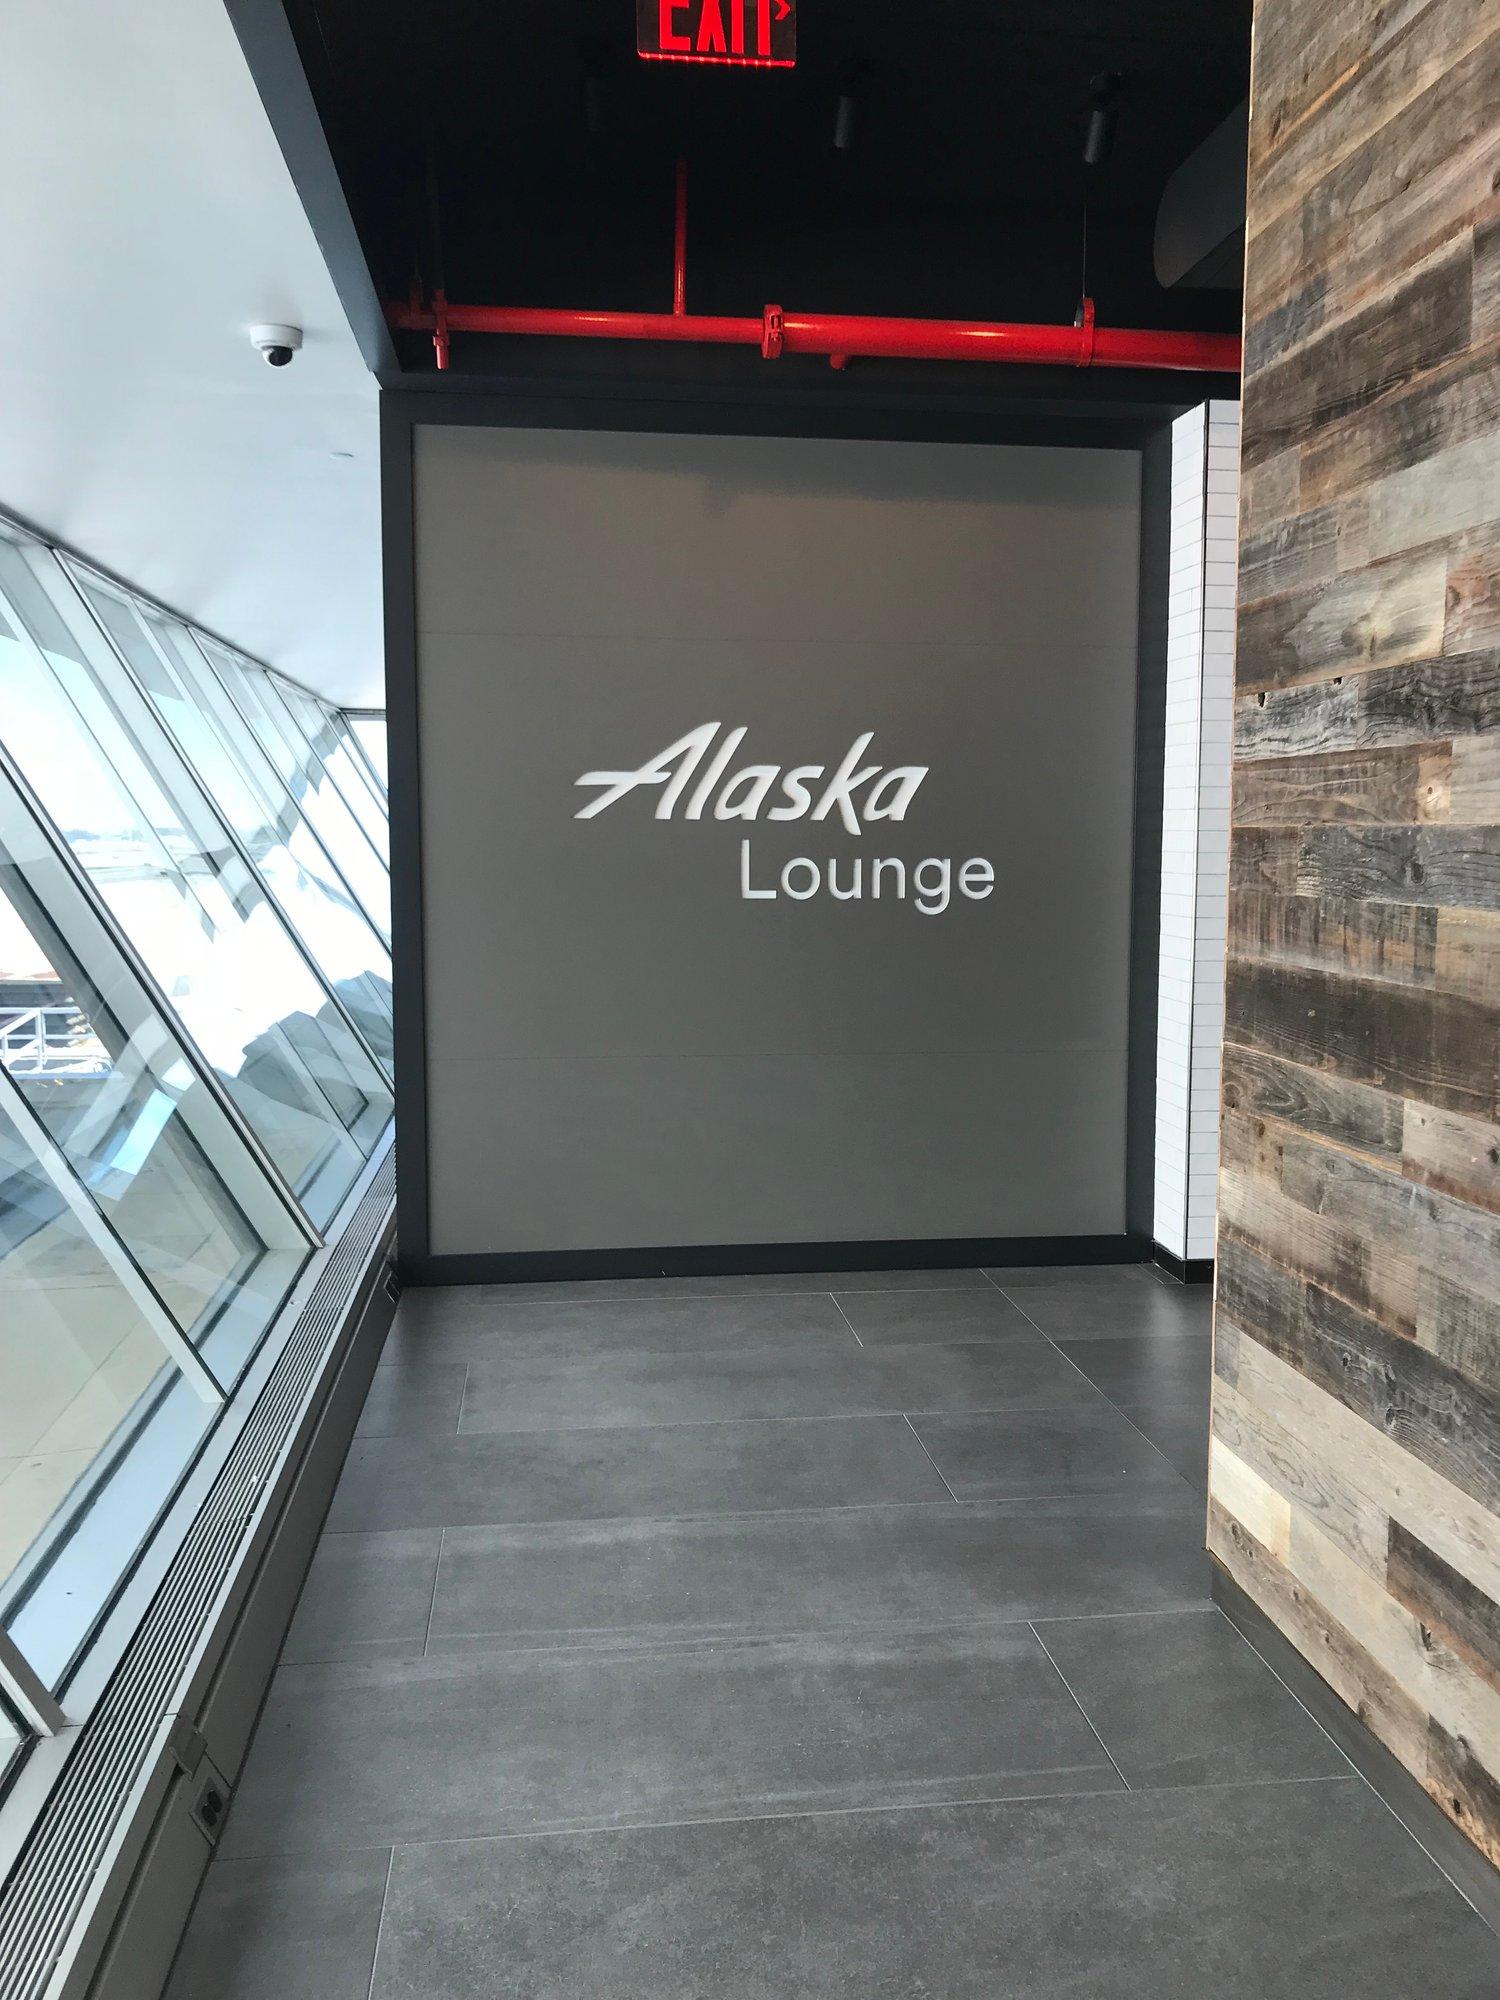 Alaska Airlines Alaska Lounge image 31 of 33